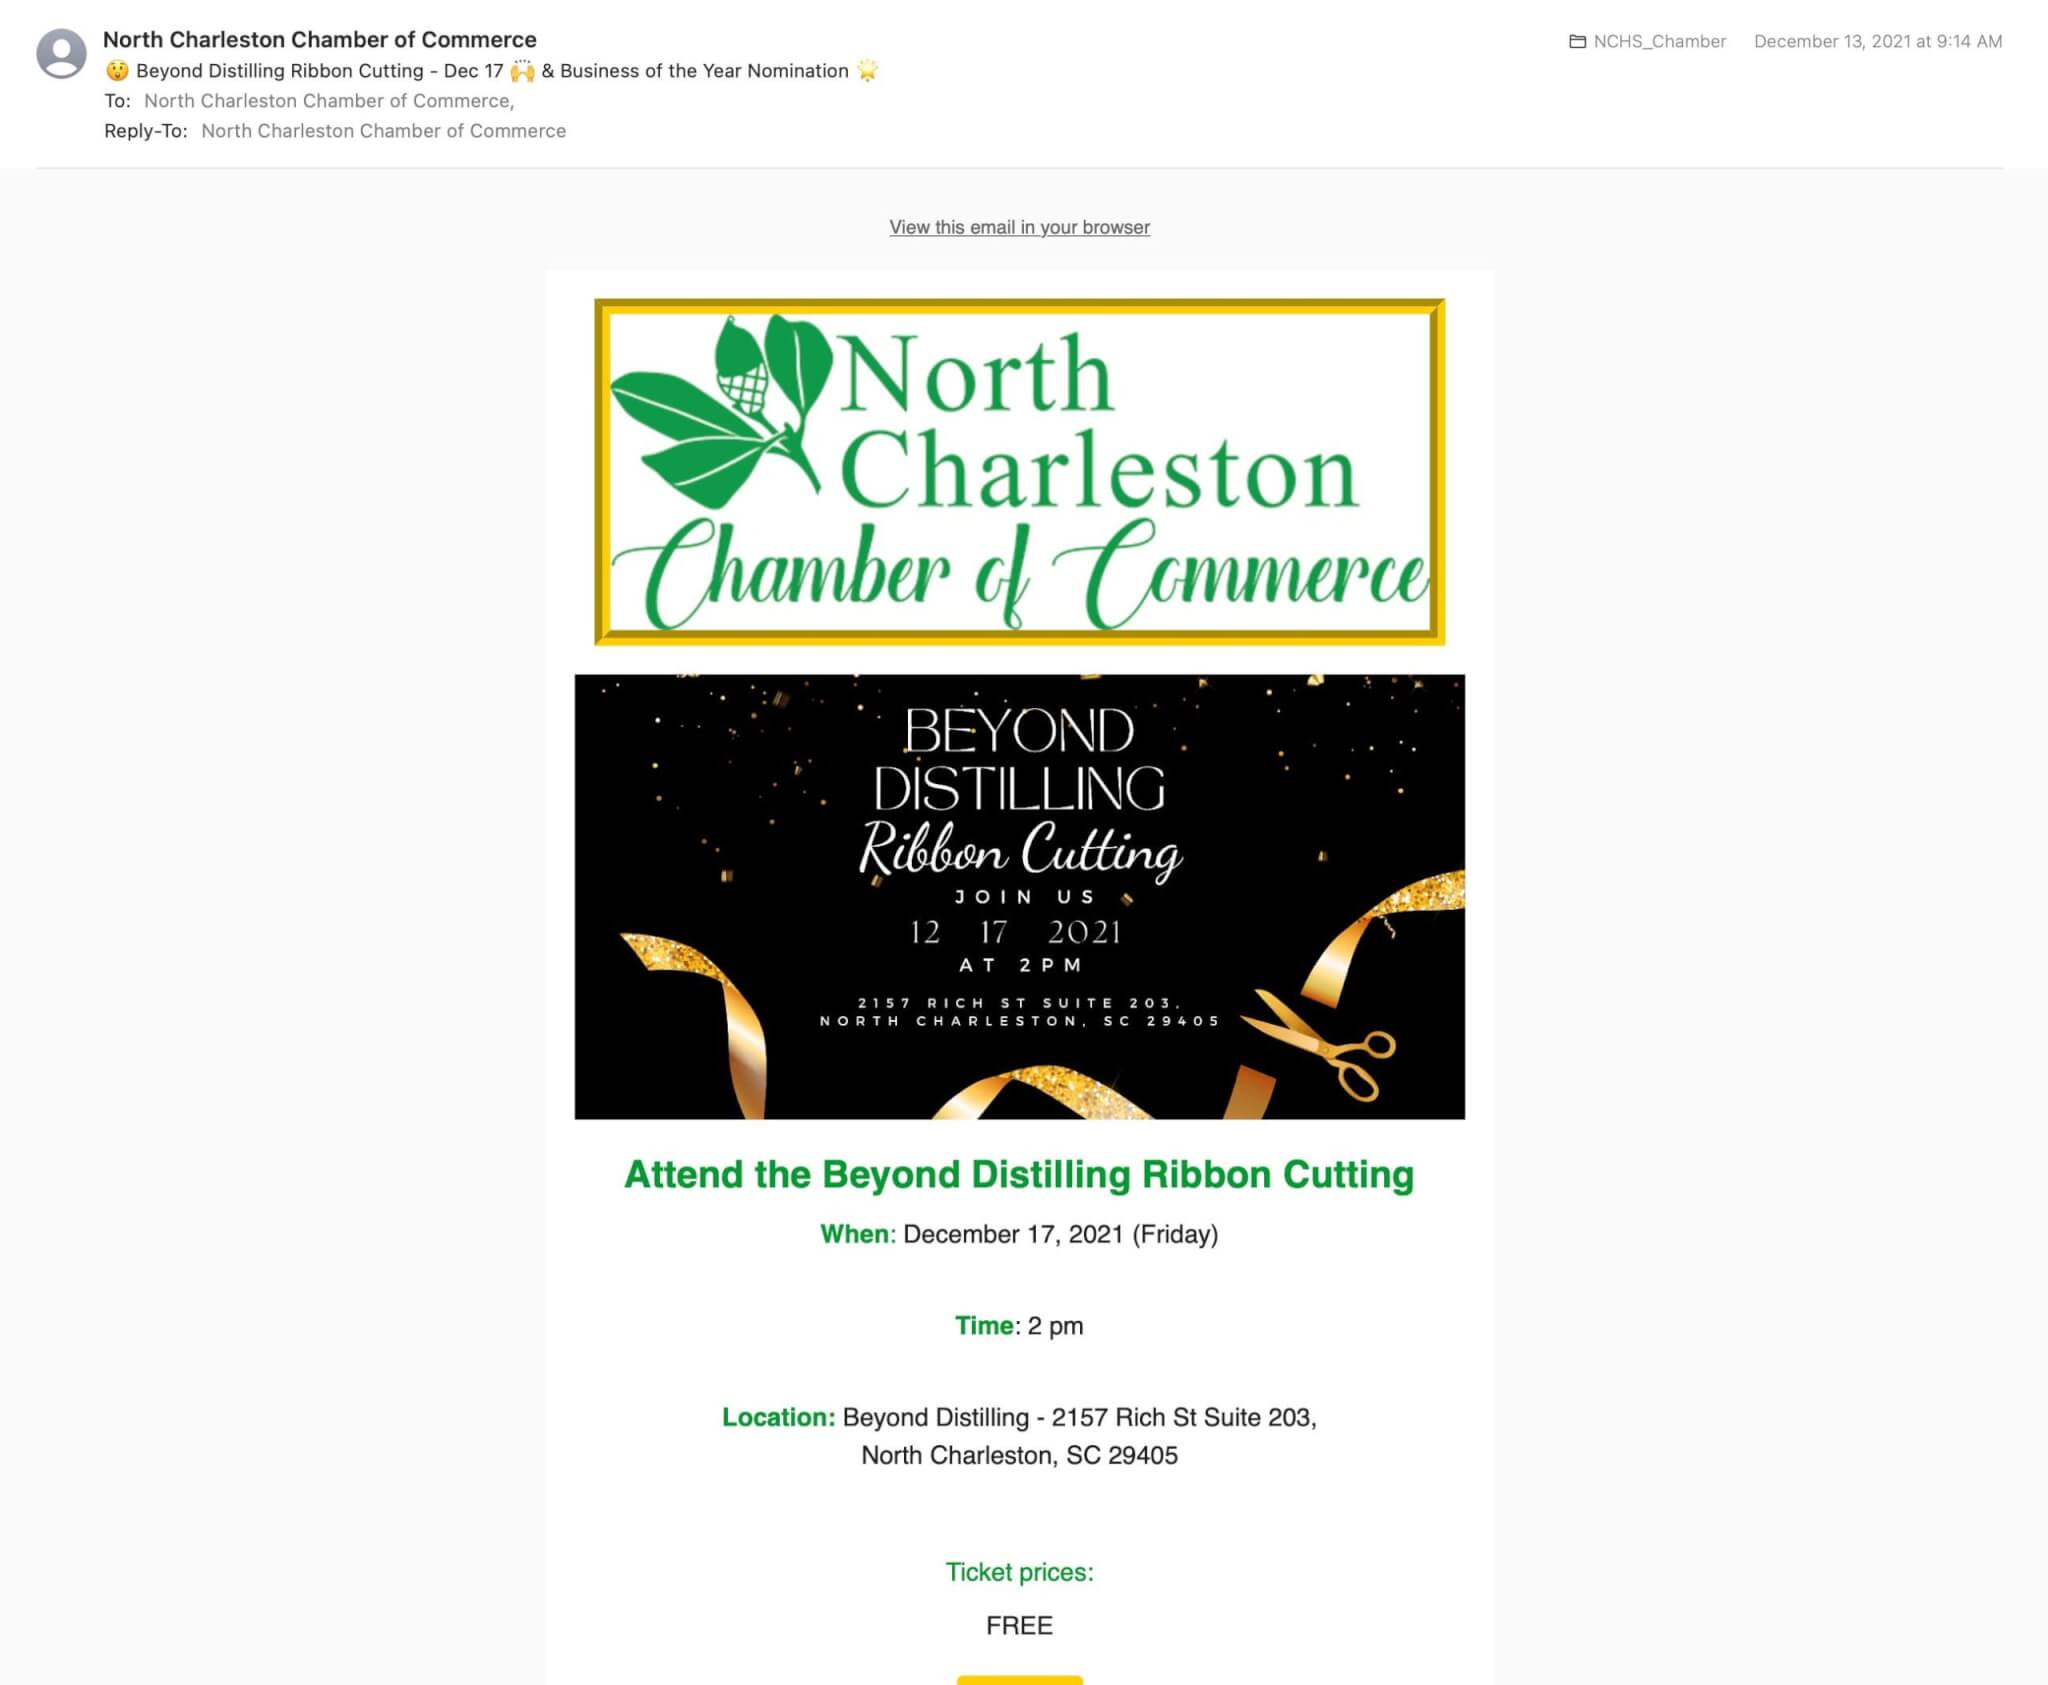 North Charleston Chamber of Commerce Newsletter created by Stingray Branding 